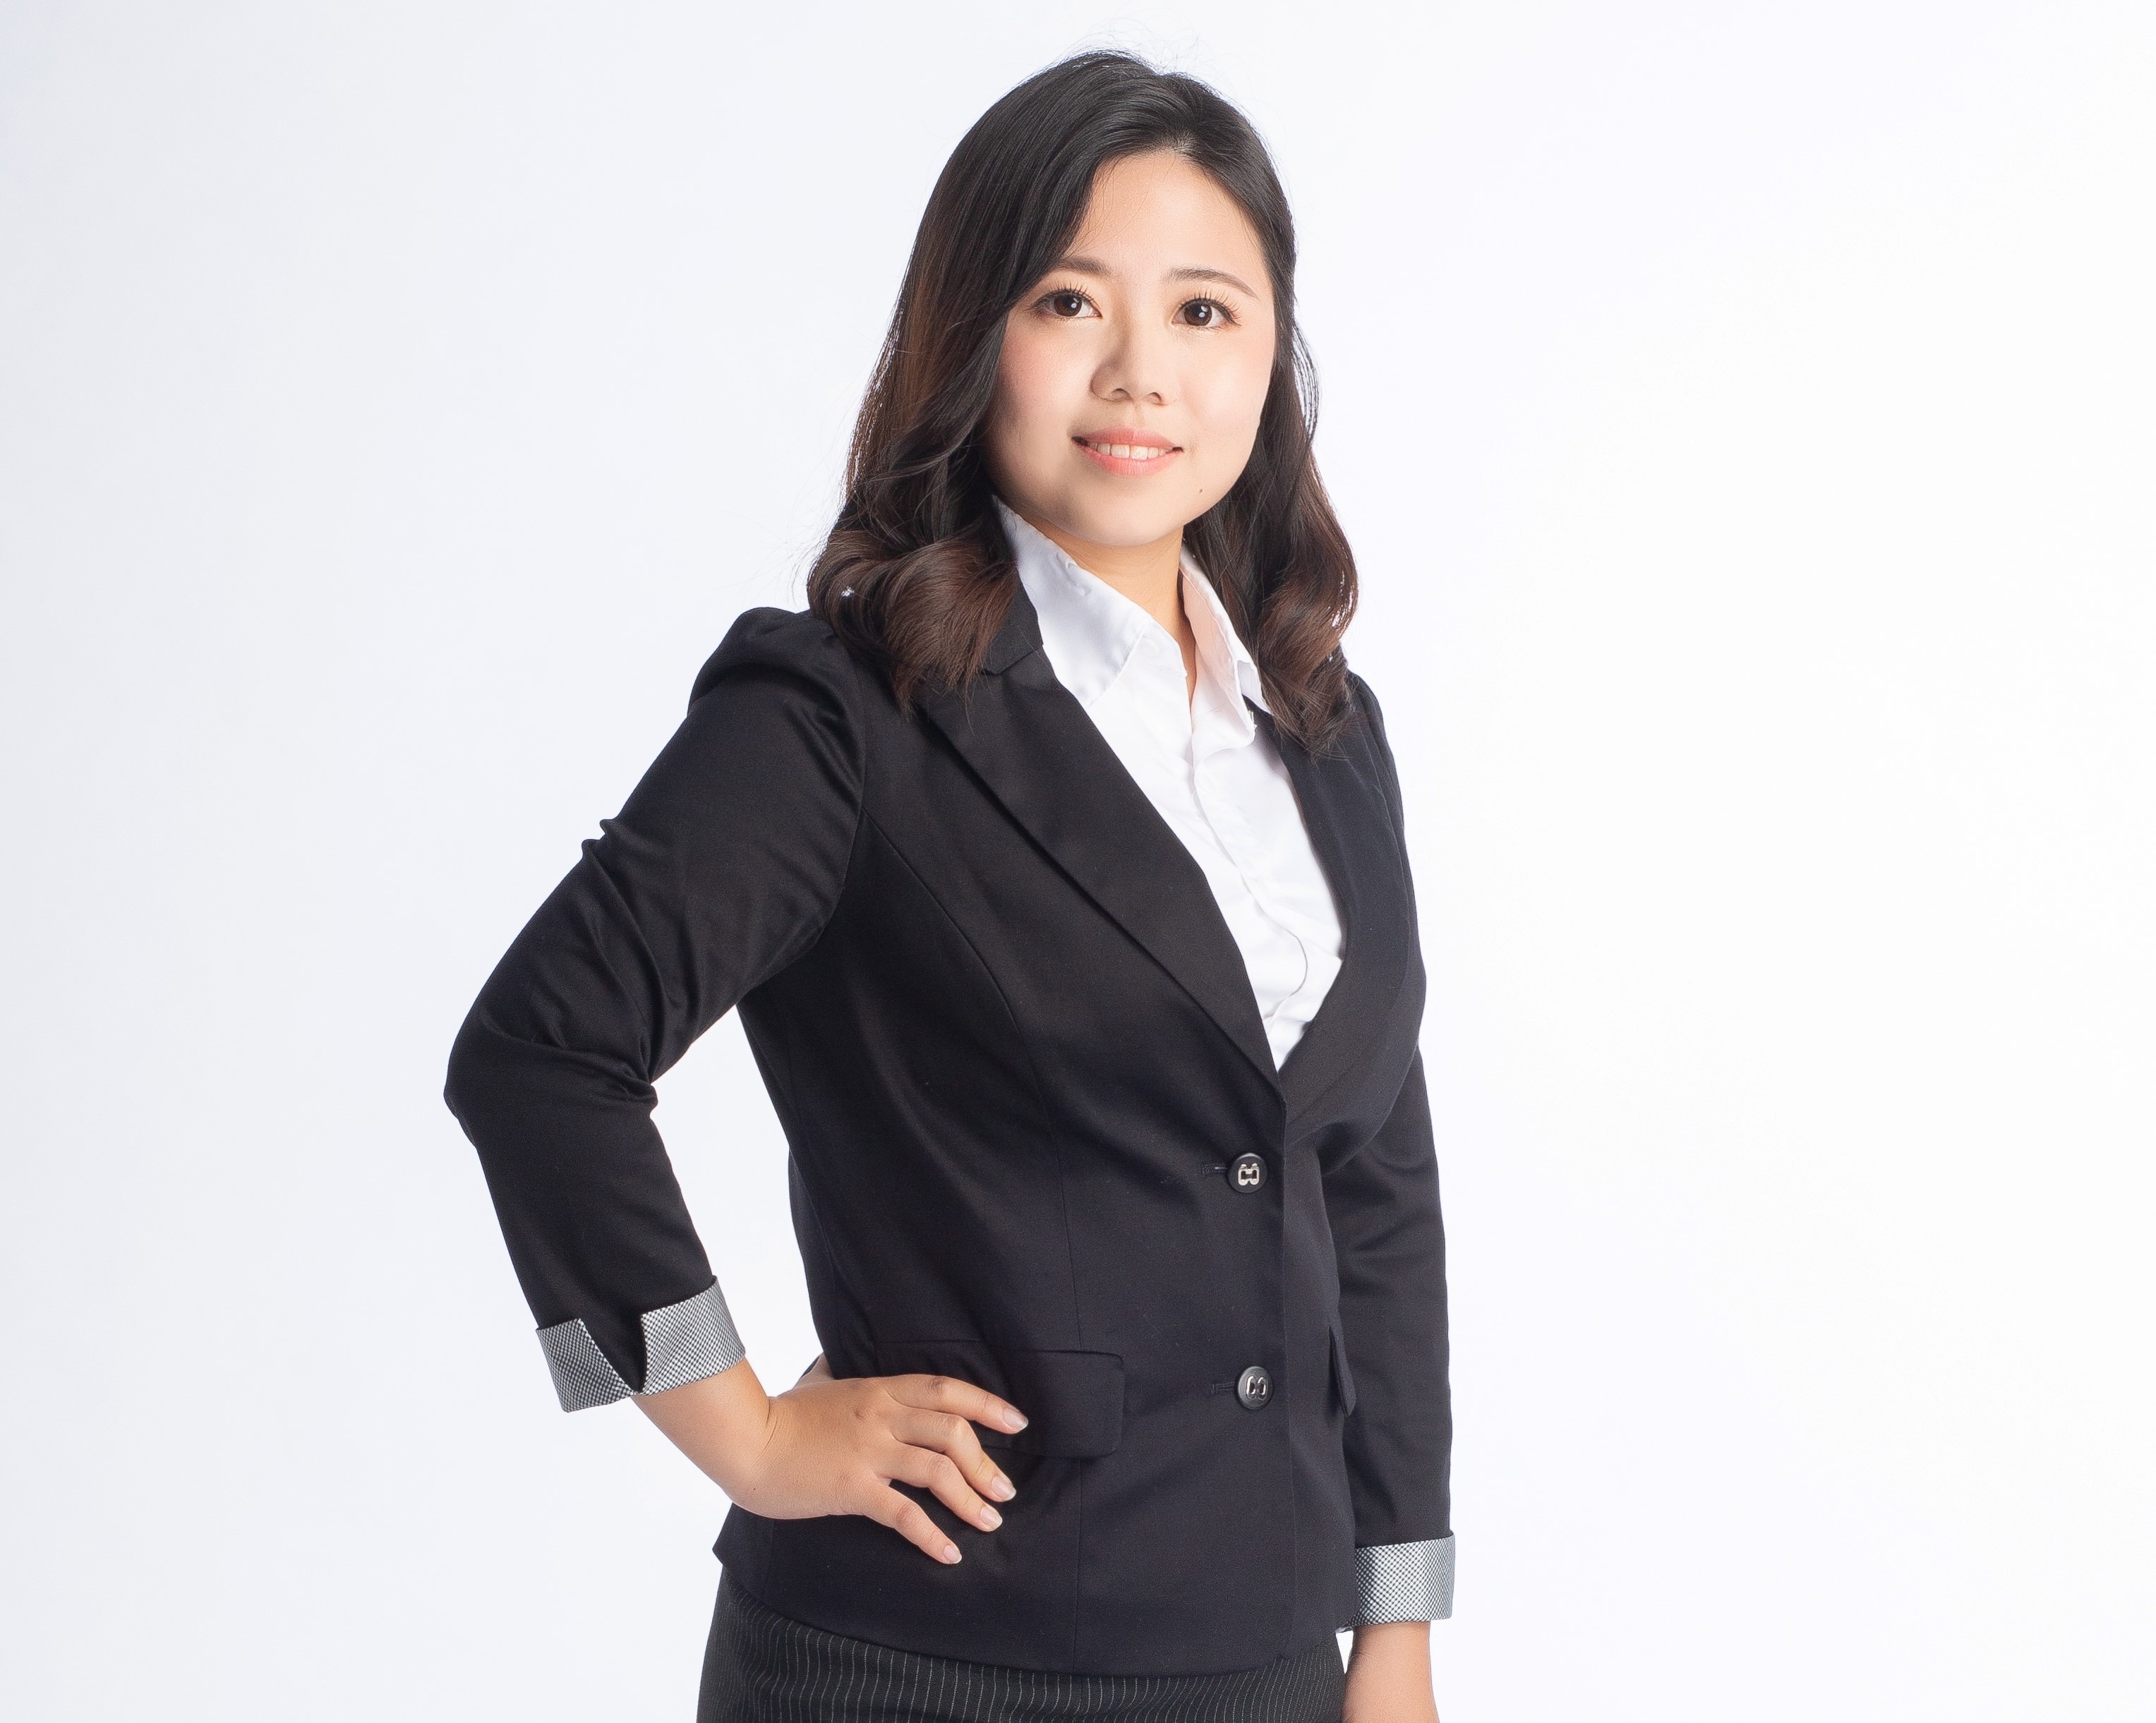 Ms. Ya Ting Shih, Environmental Engineer